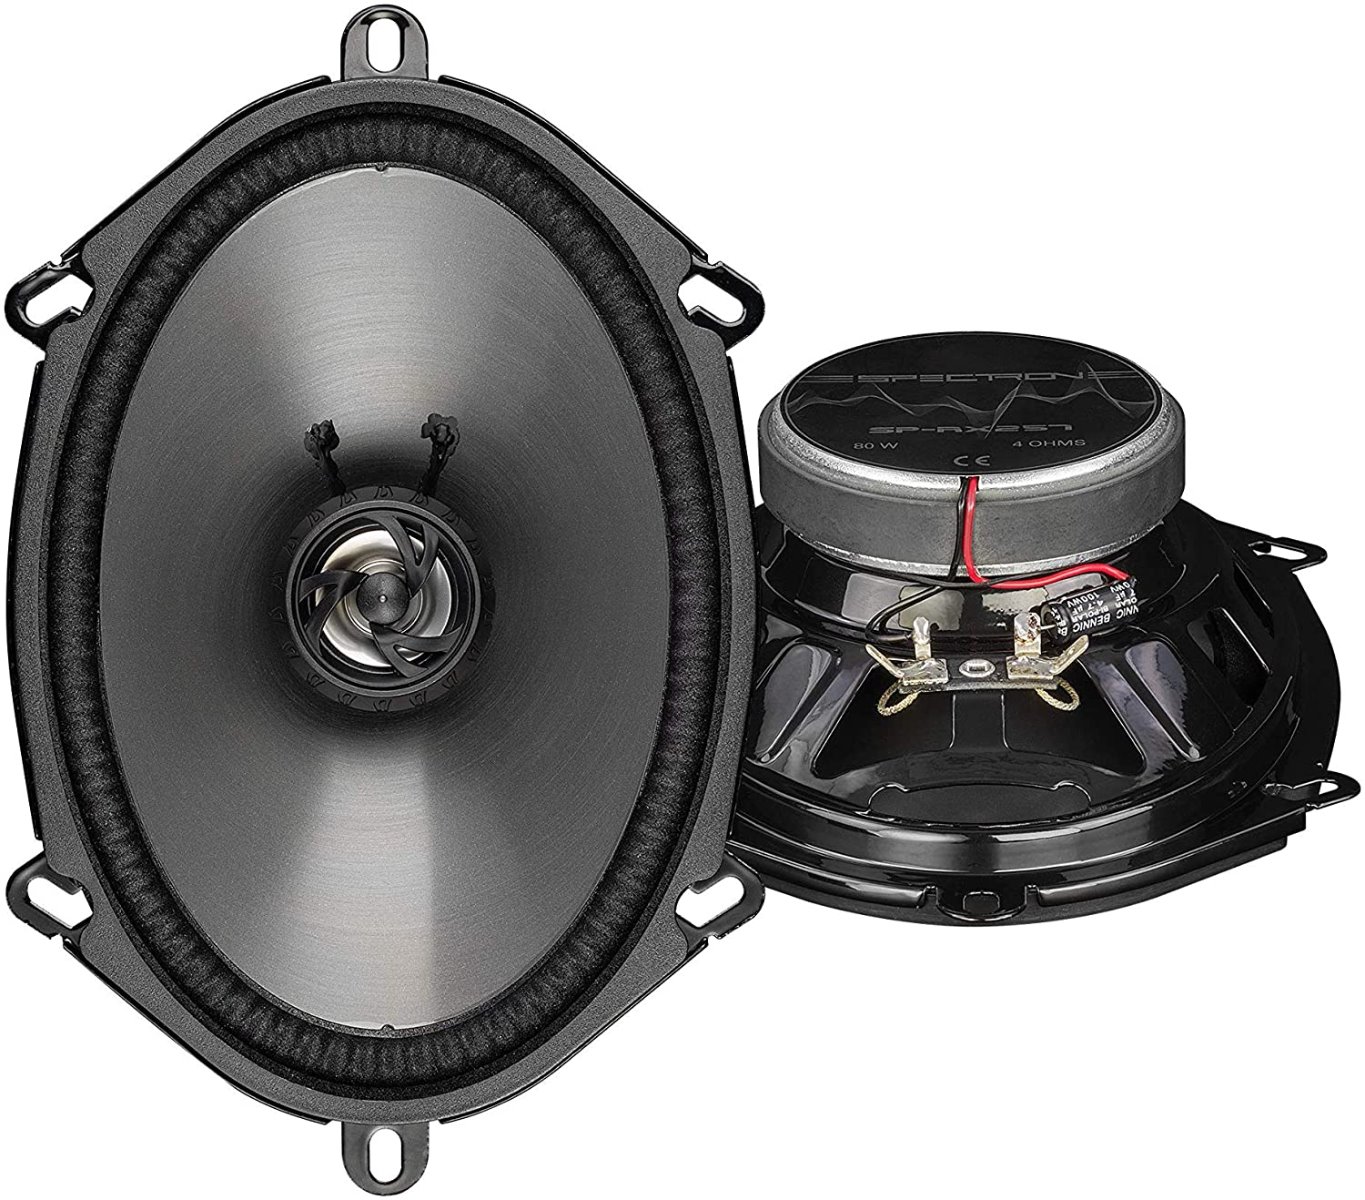 SPECTRON SP-RX257 Klangstarker 13 x 18 cm / 5 x 7 Zoll Lautsprecher für Autos und Reisemobile, 2-Wege Koaxial System, oval, 80 Watt 